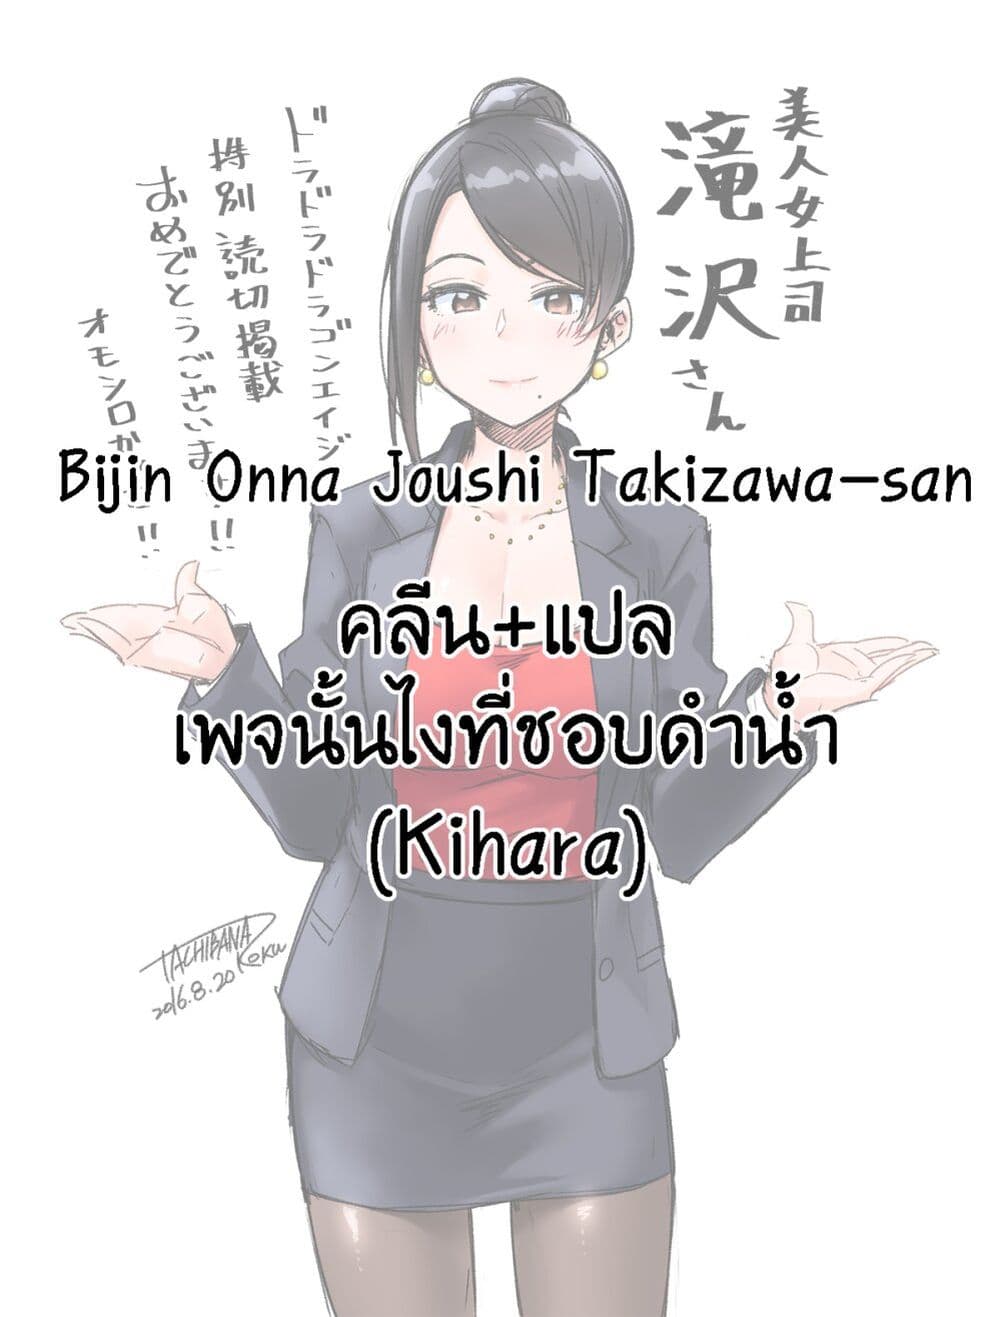 Bijin Onna Joushi Takizawa-san หัวหน้าสุดสวย ทากิซาวะซัง 8-8